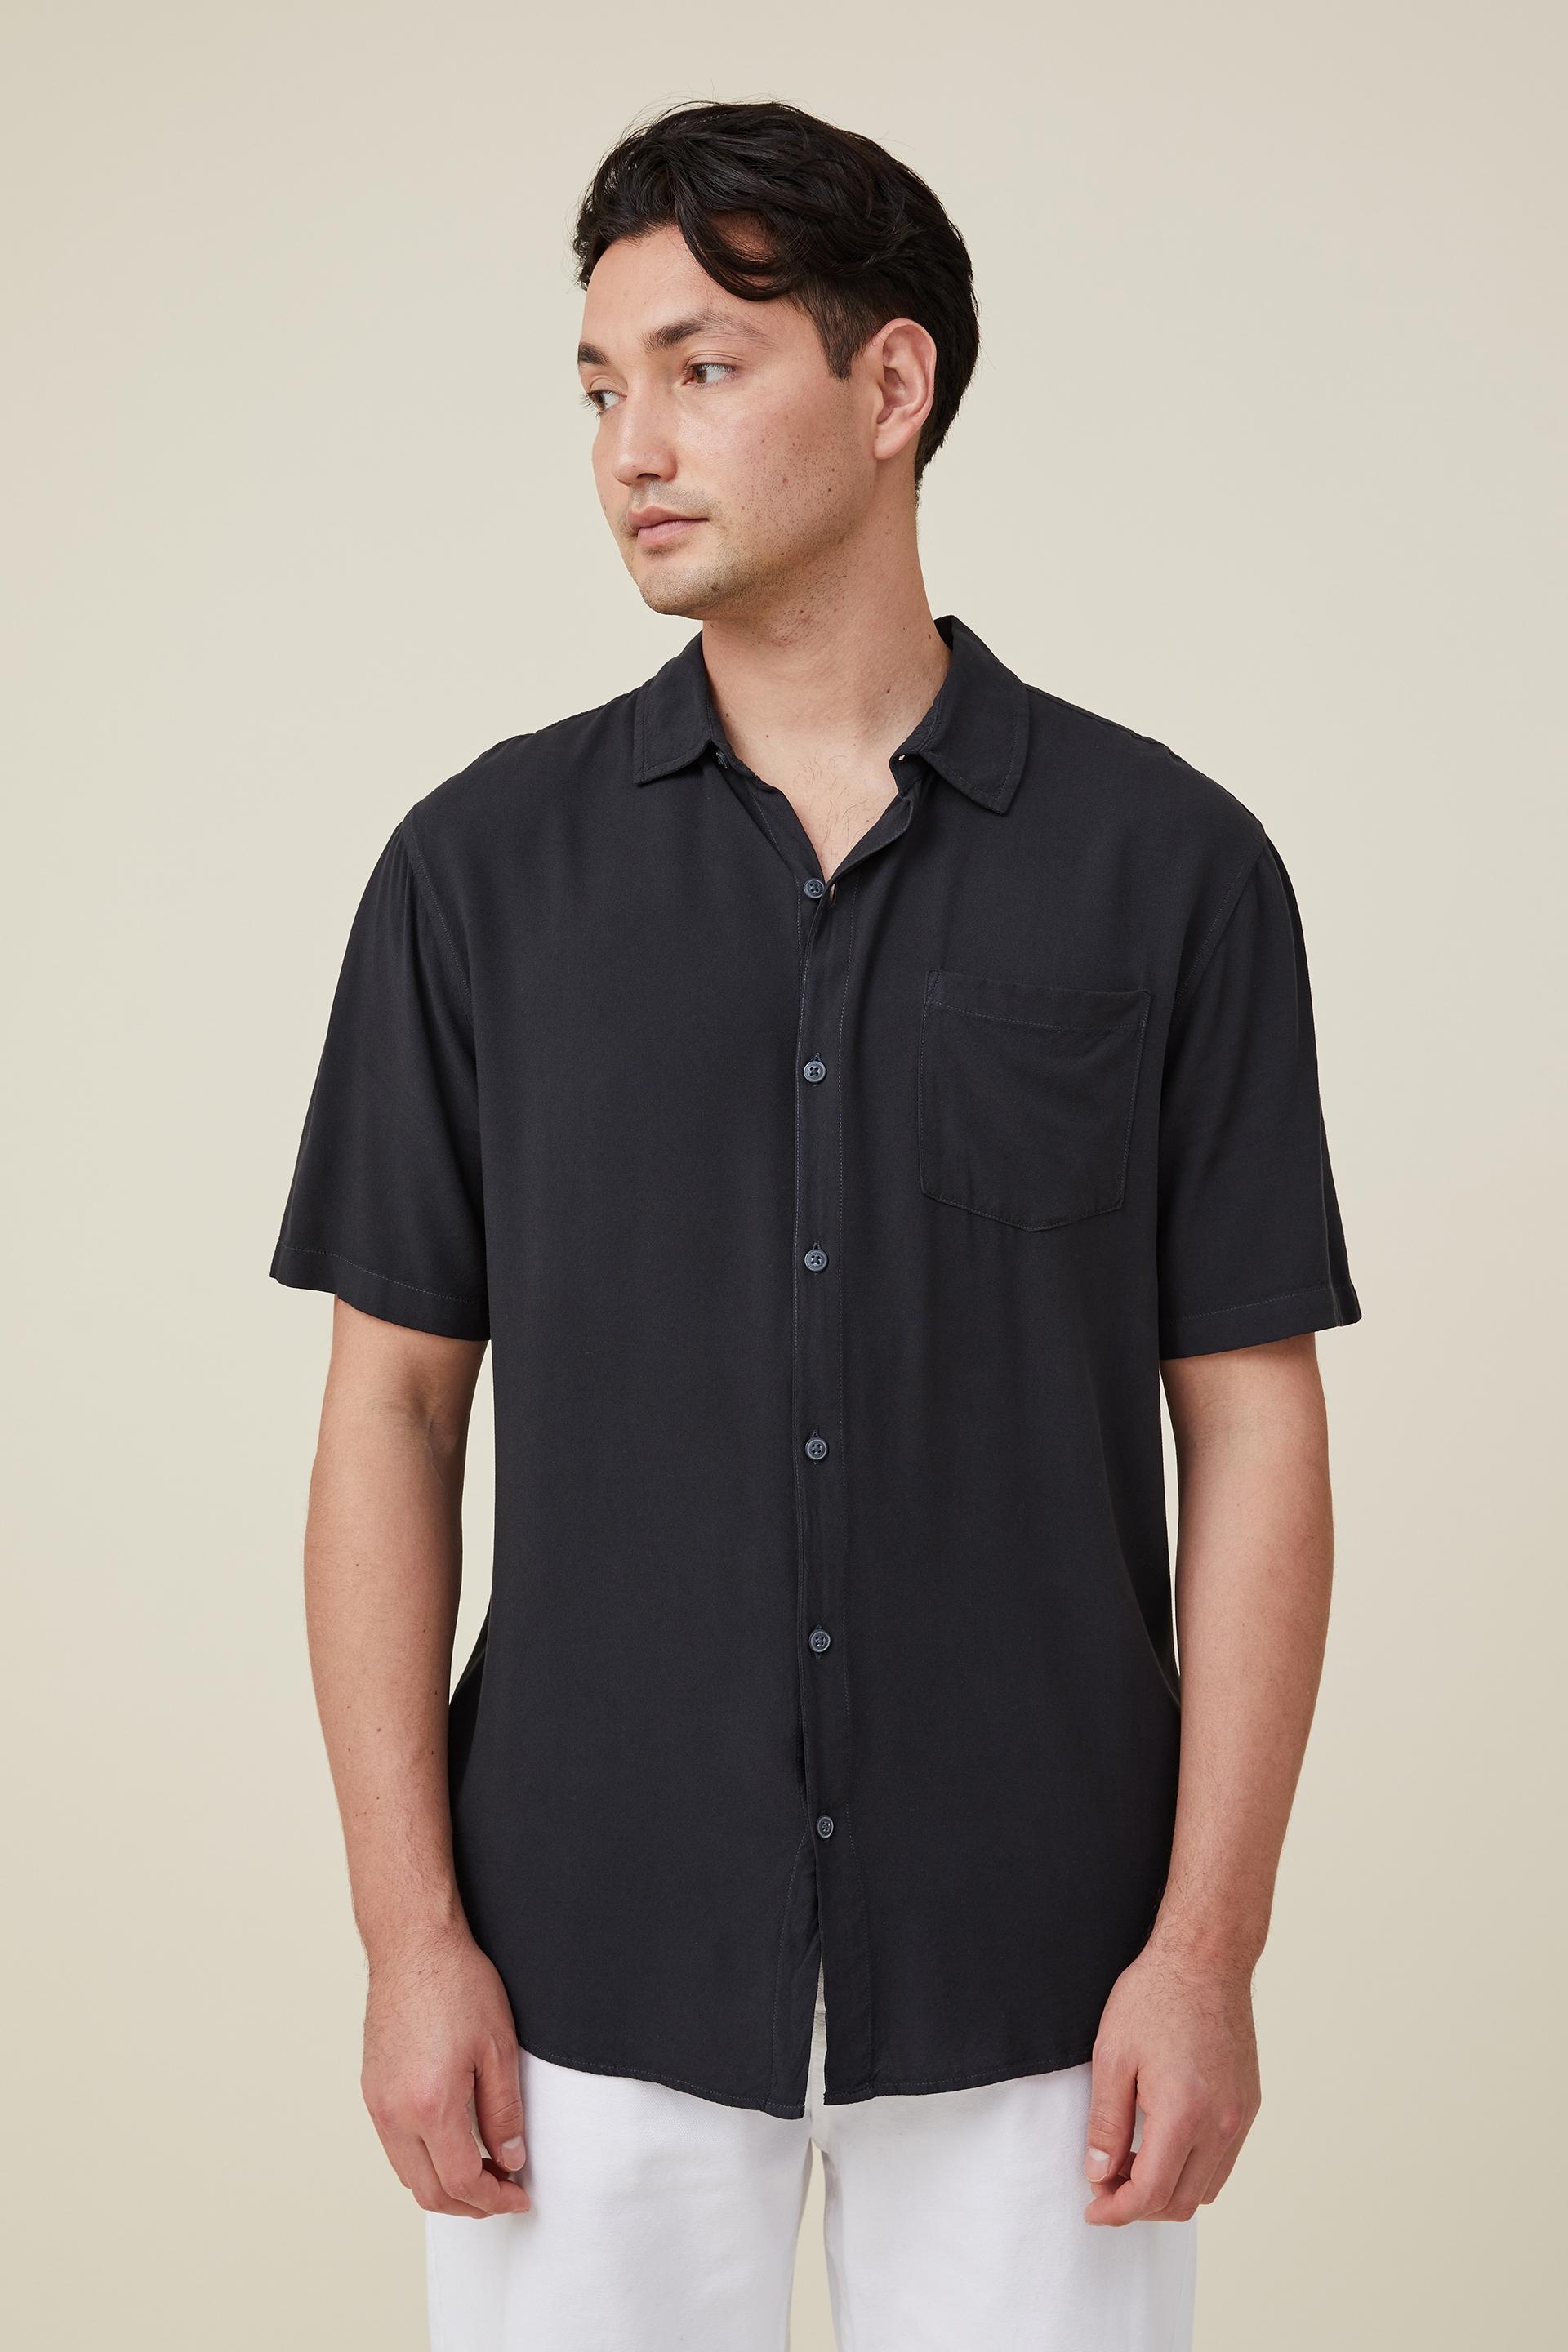 Cuban short sleeve shirt - washed black Cotton On Shirts | Superbalist.com